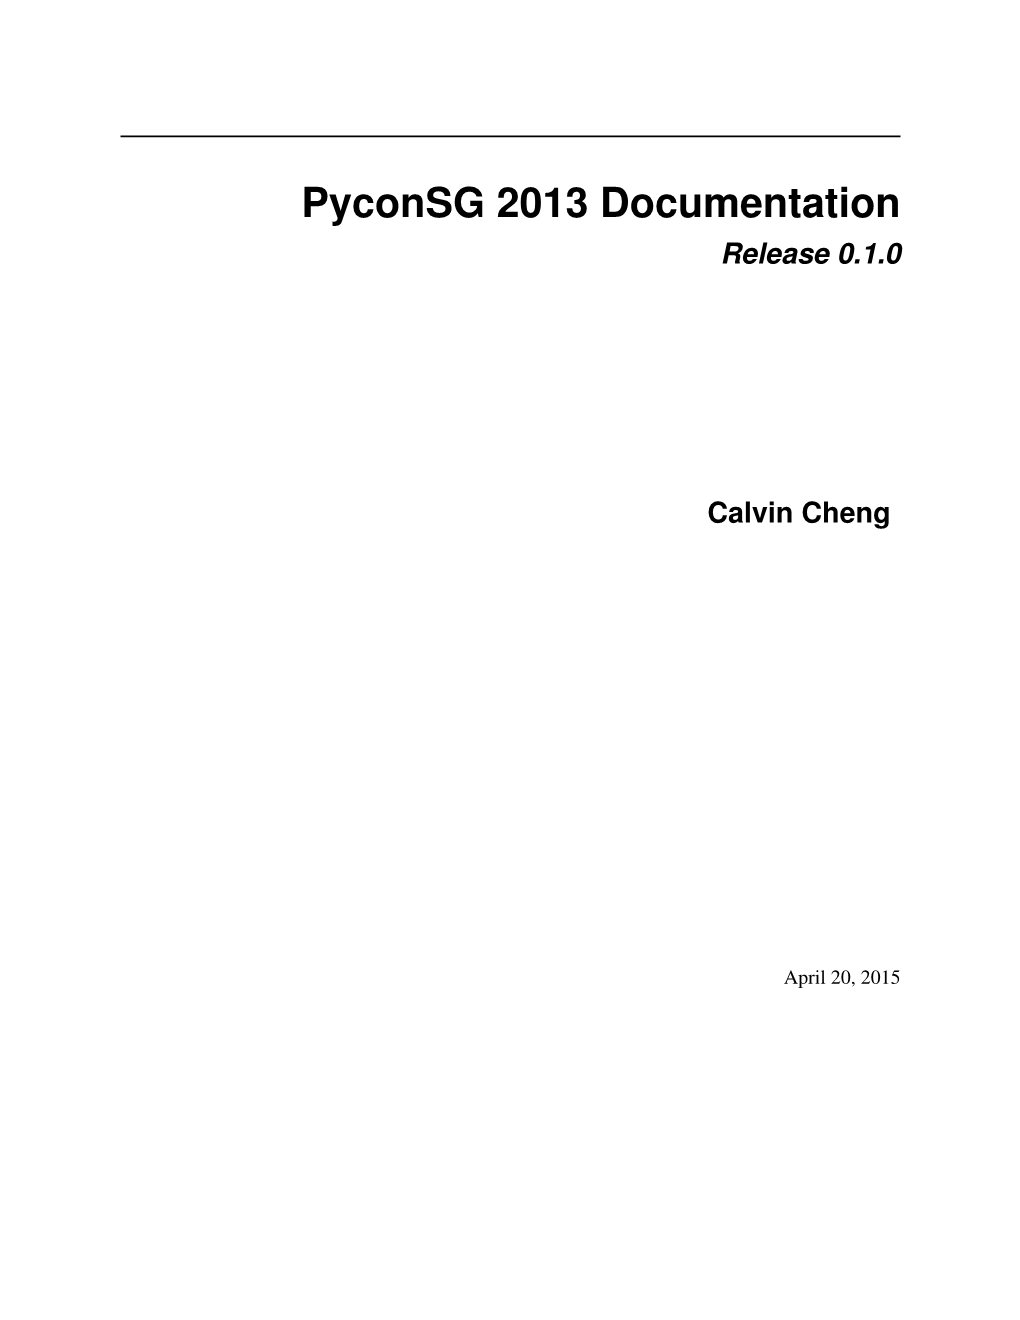 Pyconsg 2013 Documentation Release 0.1.0